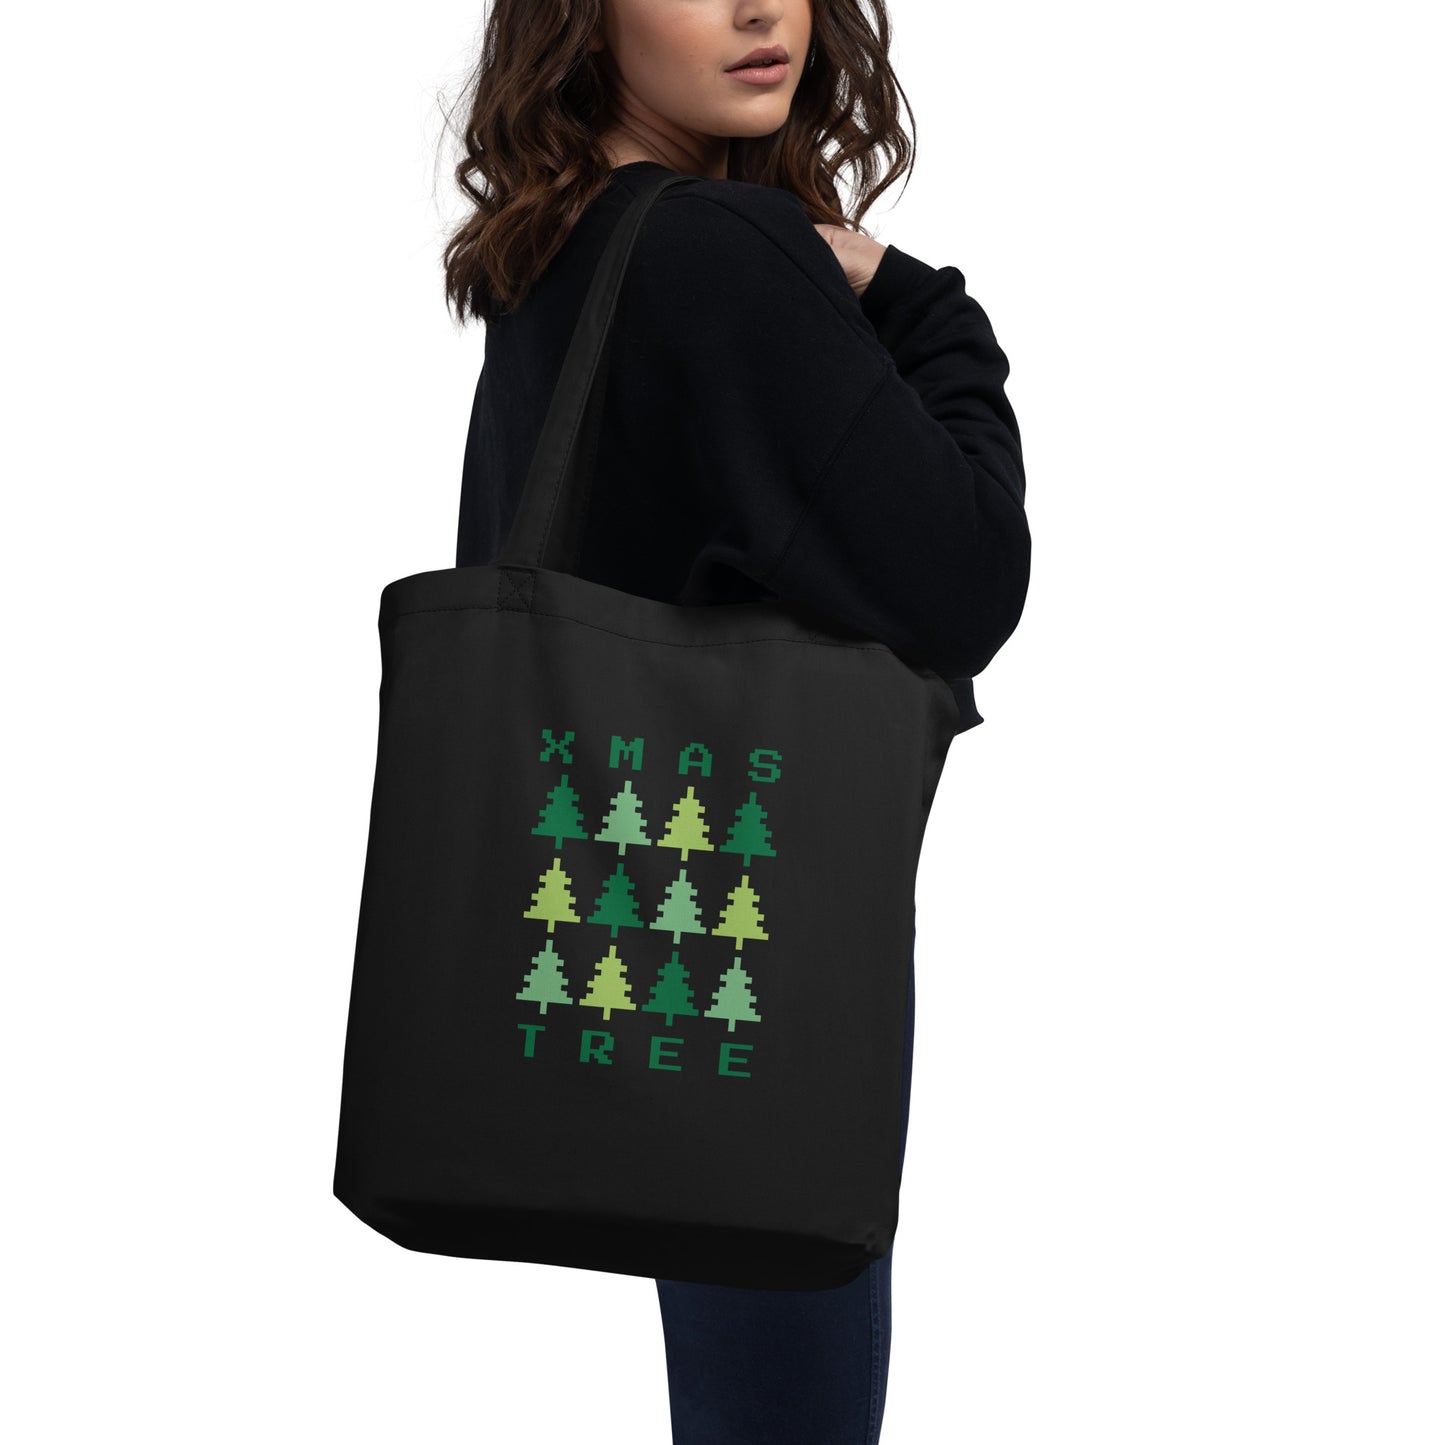 X-Mas Tree Eco Tote Bag